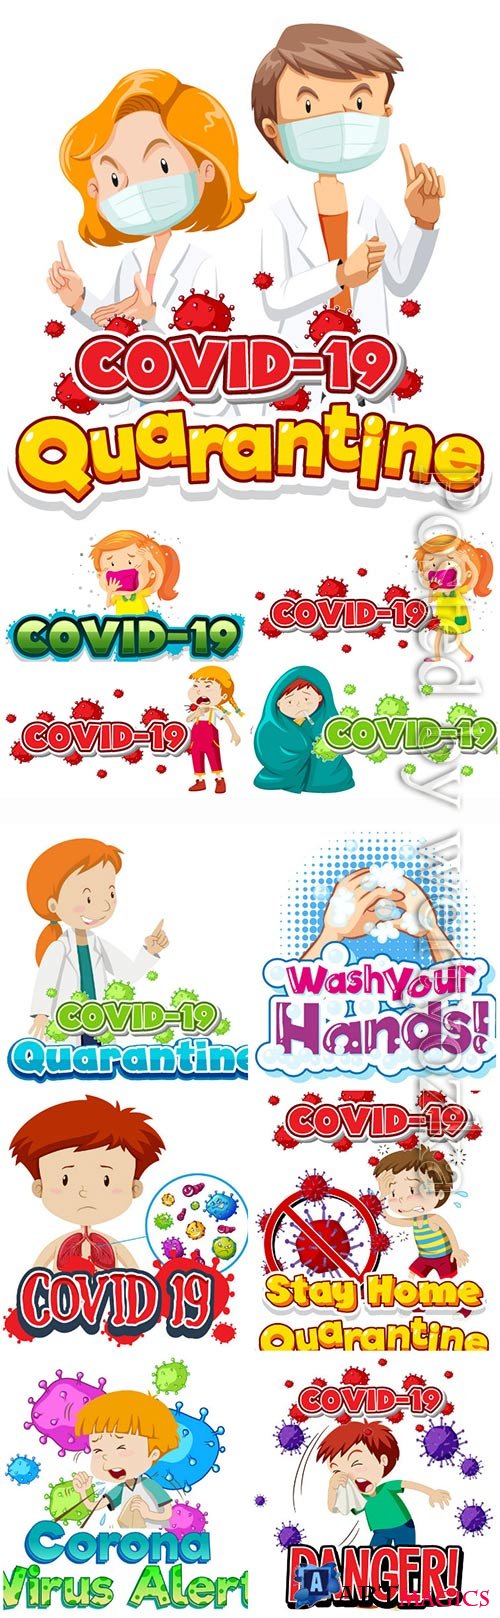 COVID 19, Coranavirus vector illustration sets # 17